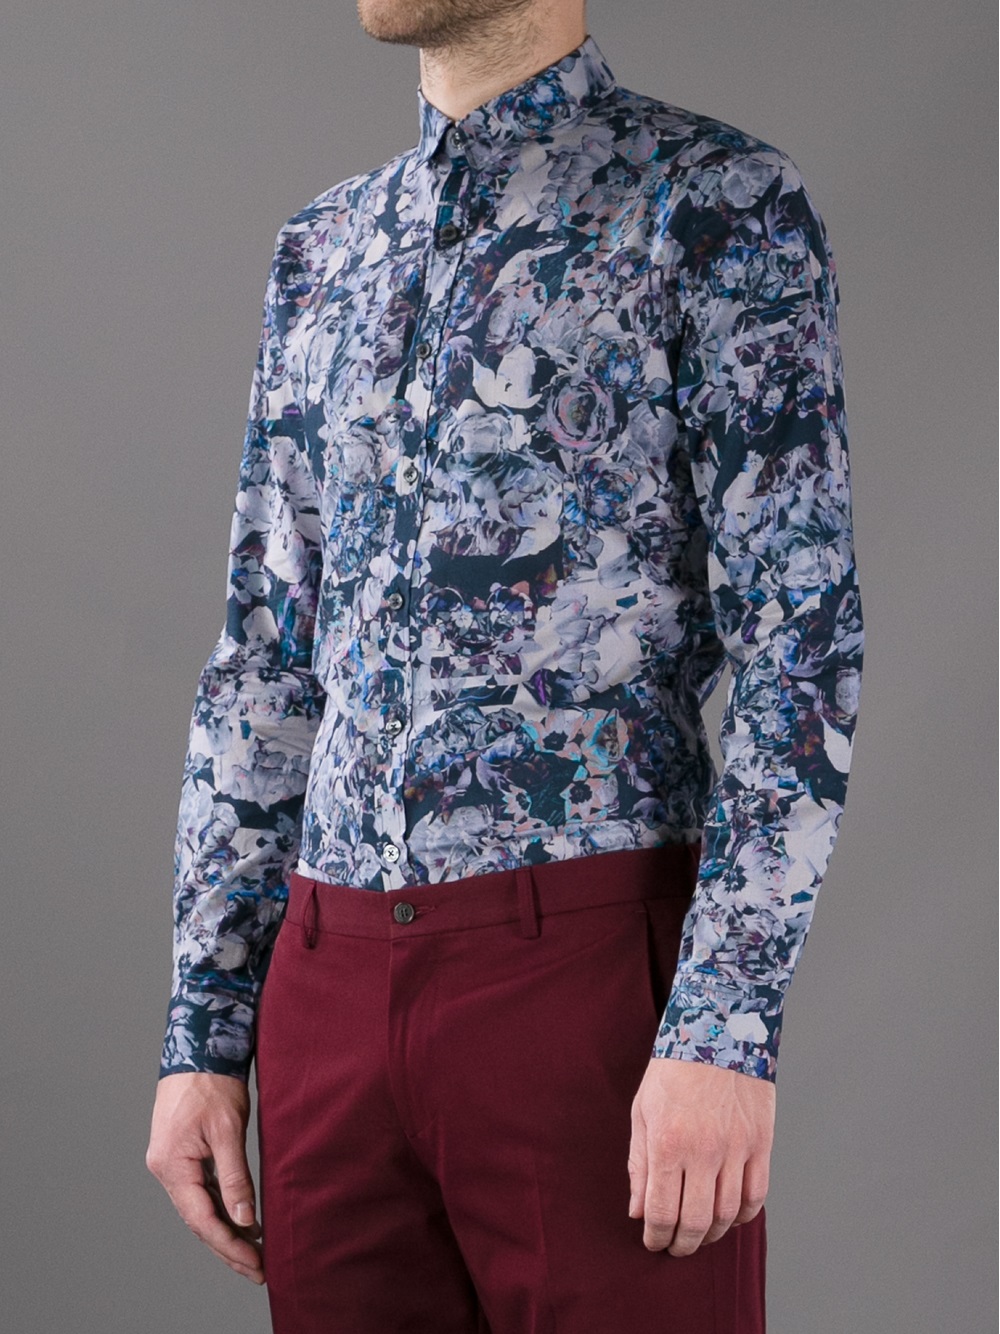 Lyst - Paul Smith Black Label Floral Button Down Shirt for Men